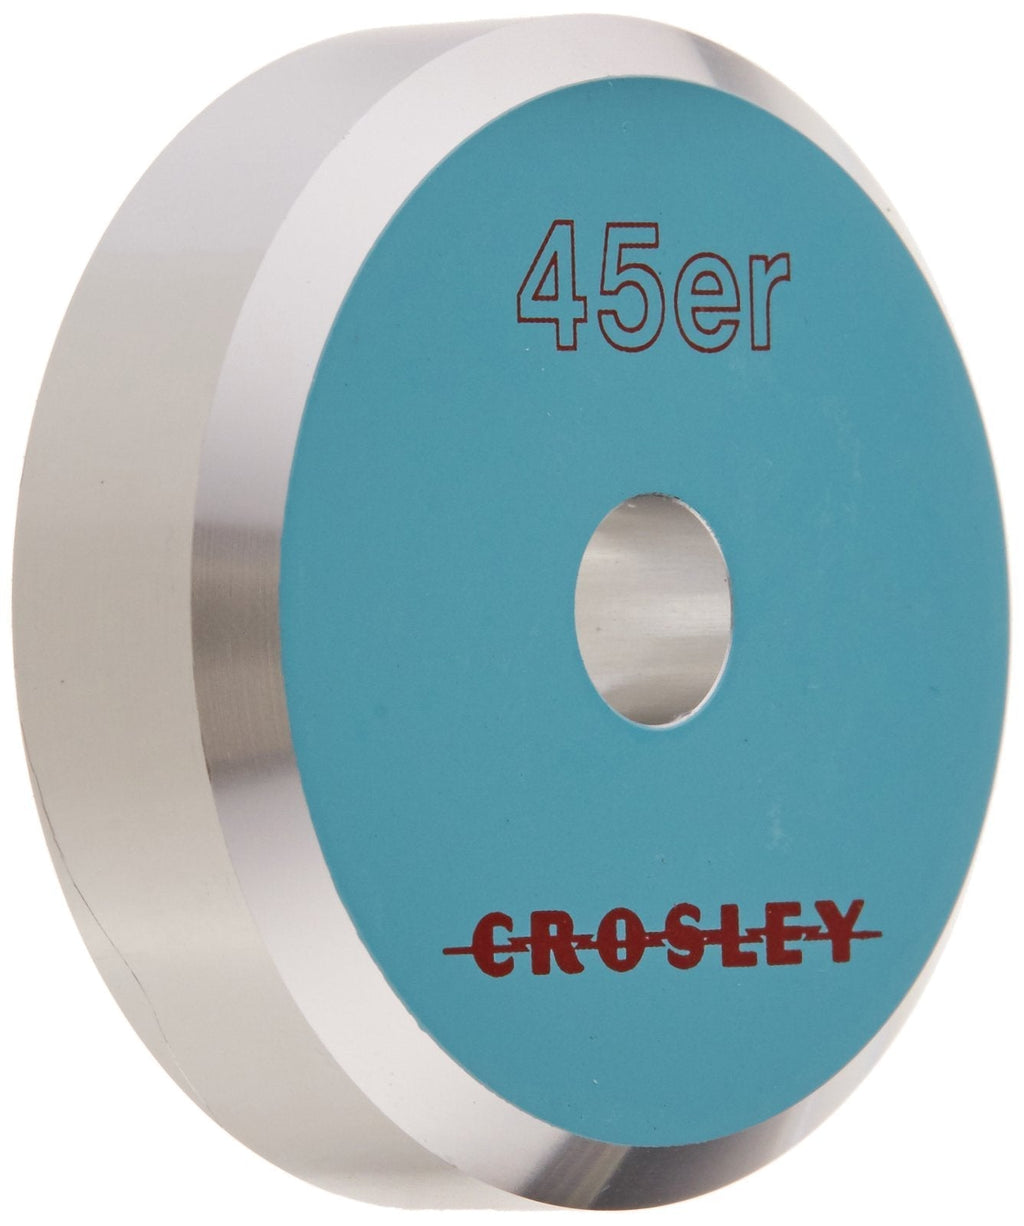 Crosley CR9001A-TU Aluminum 45 Adapter, Turquoise